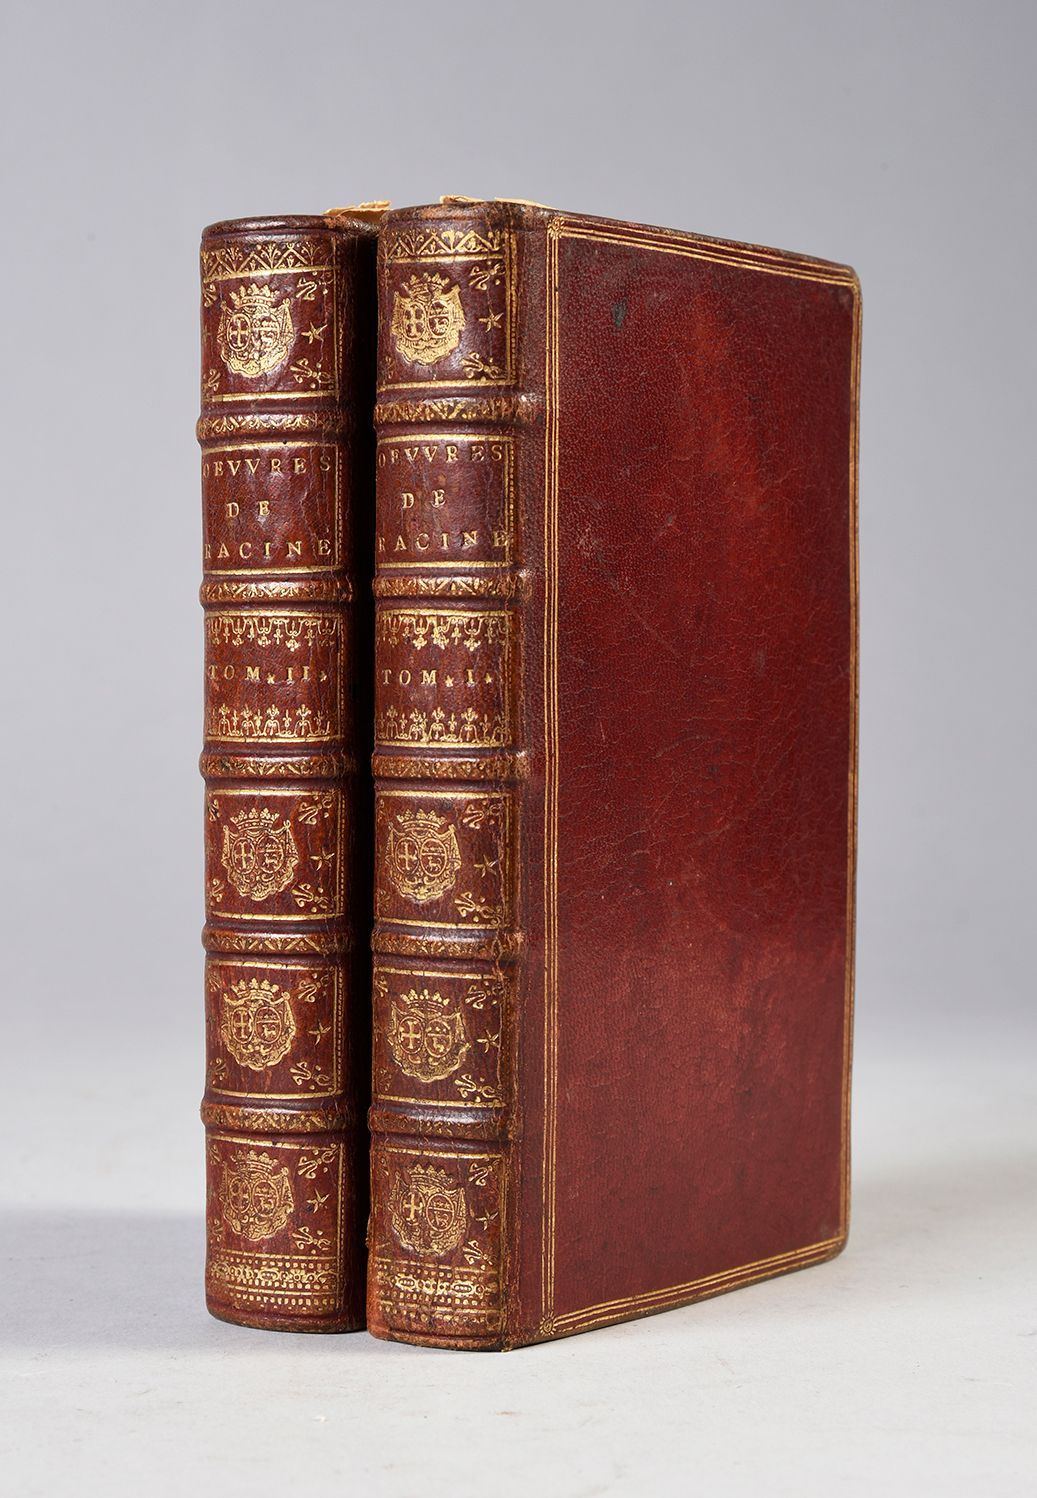 RACINE, Jean Œuvres [...]
P., Denys Thierry 1702.
2卷12册，全红摩洛哥，板上有三层丝线，书脊上有拉菲亚德和夏&hellip;